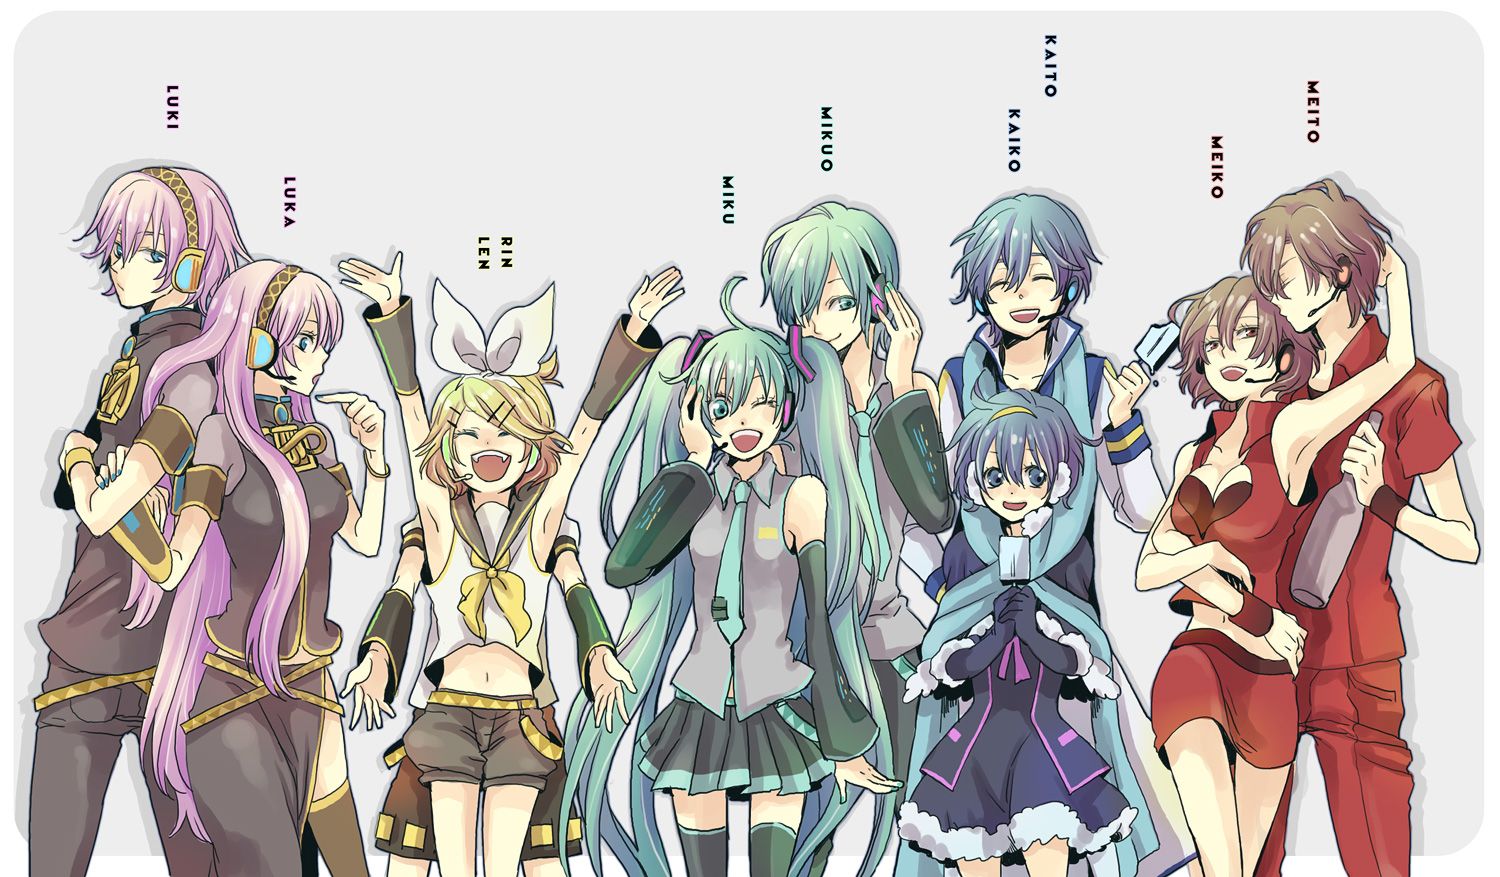 The Vocaloid Siblings/Genderbends Fandom.